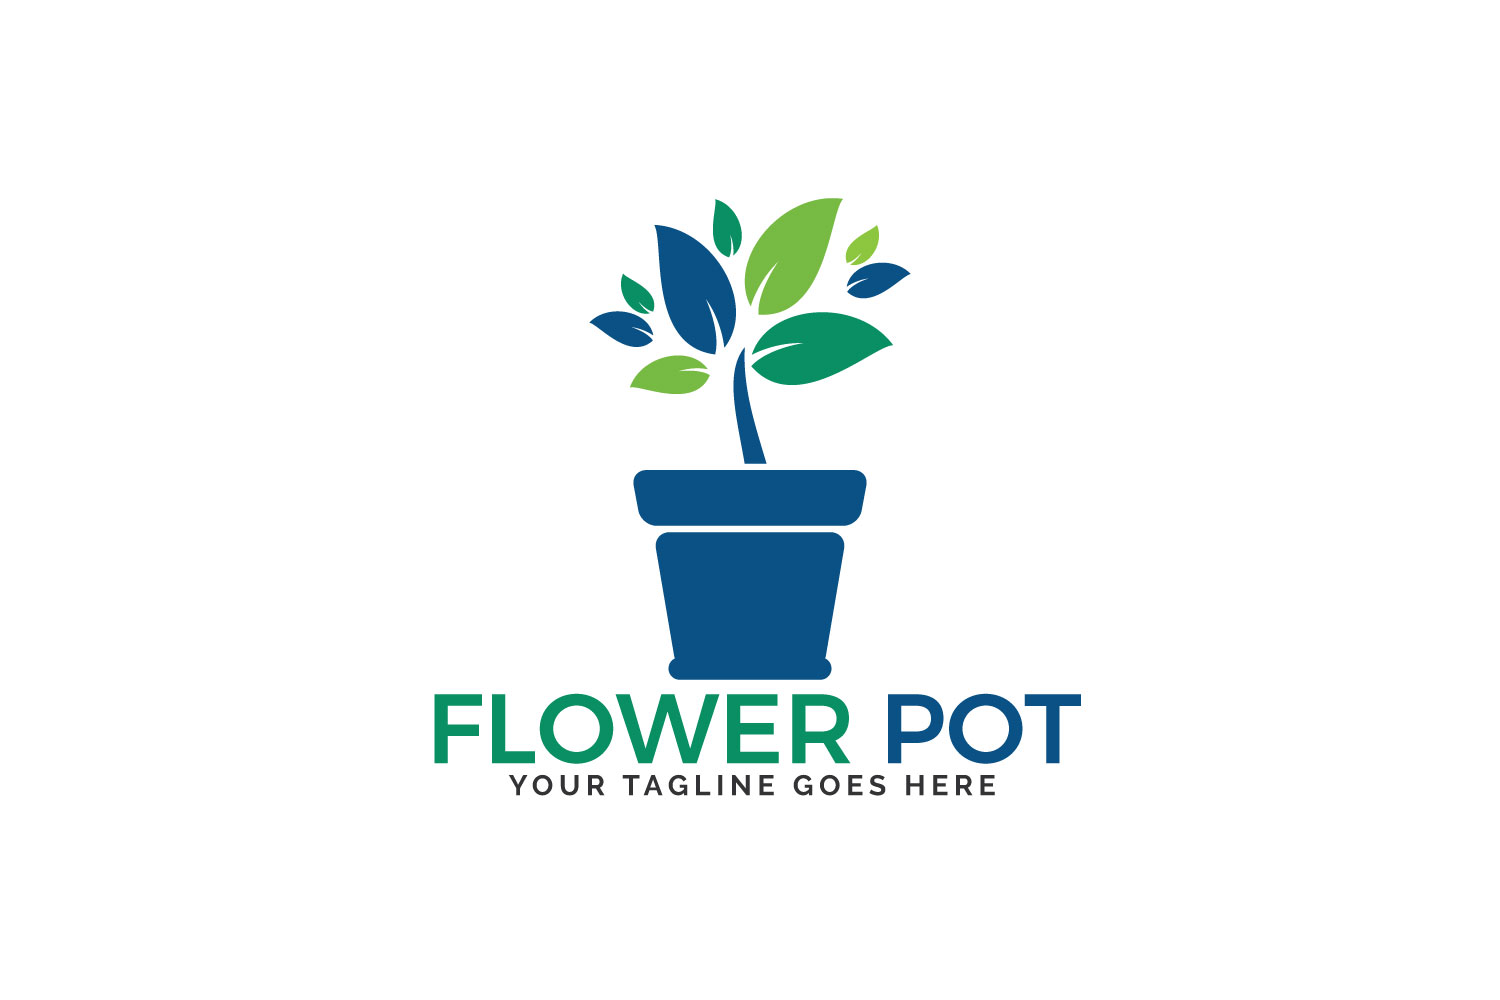 Flower Pot  logo  design  319256 Logos  Design  Bundles